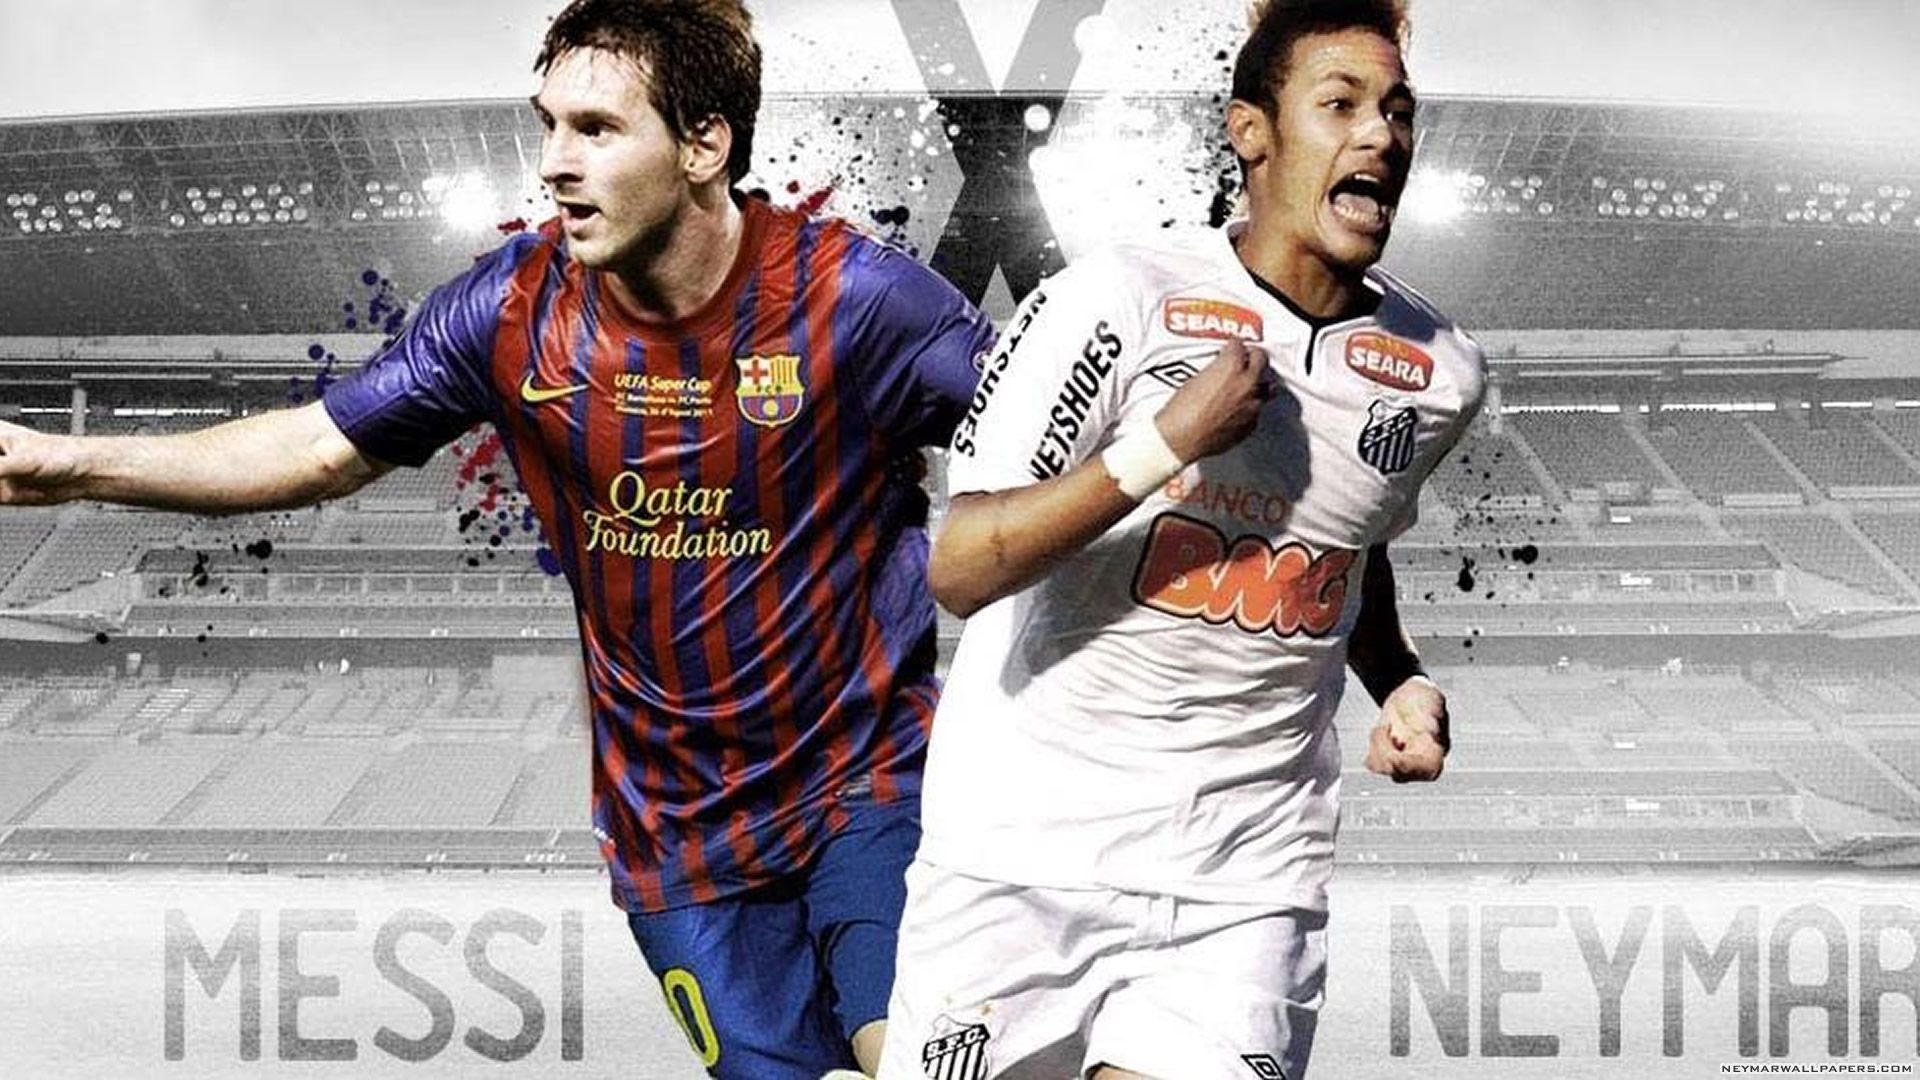 Neymar And Messi Wallpaper .wallpapertip.com